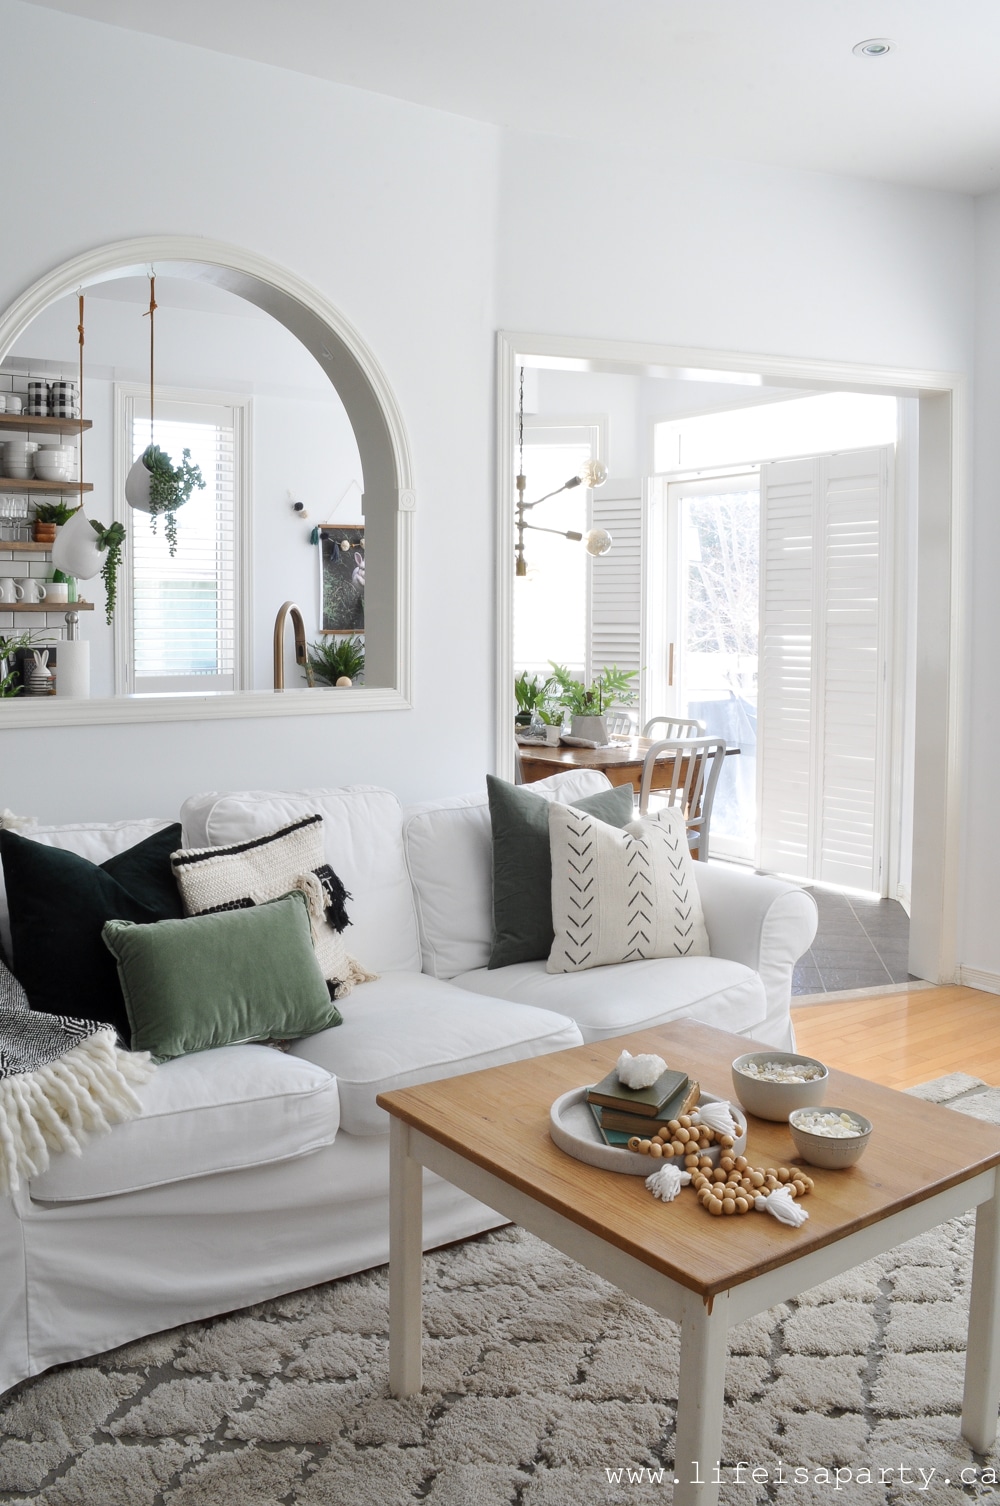 black, white and green decor for spring living room